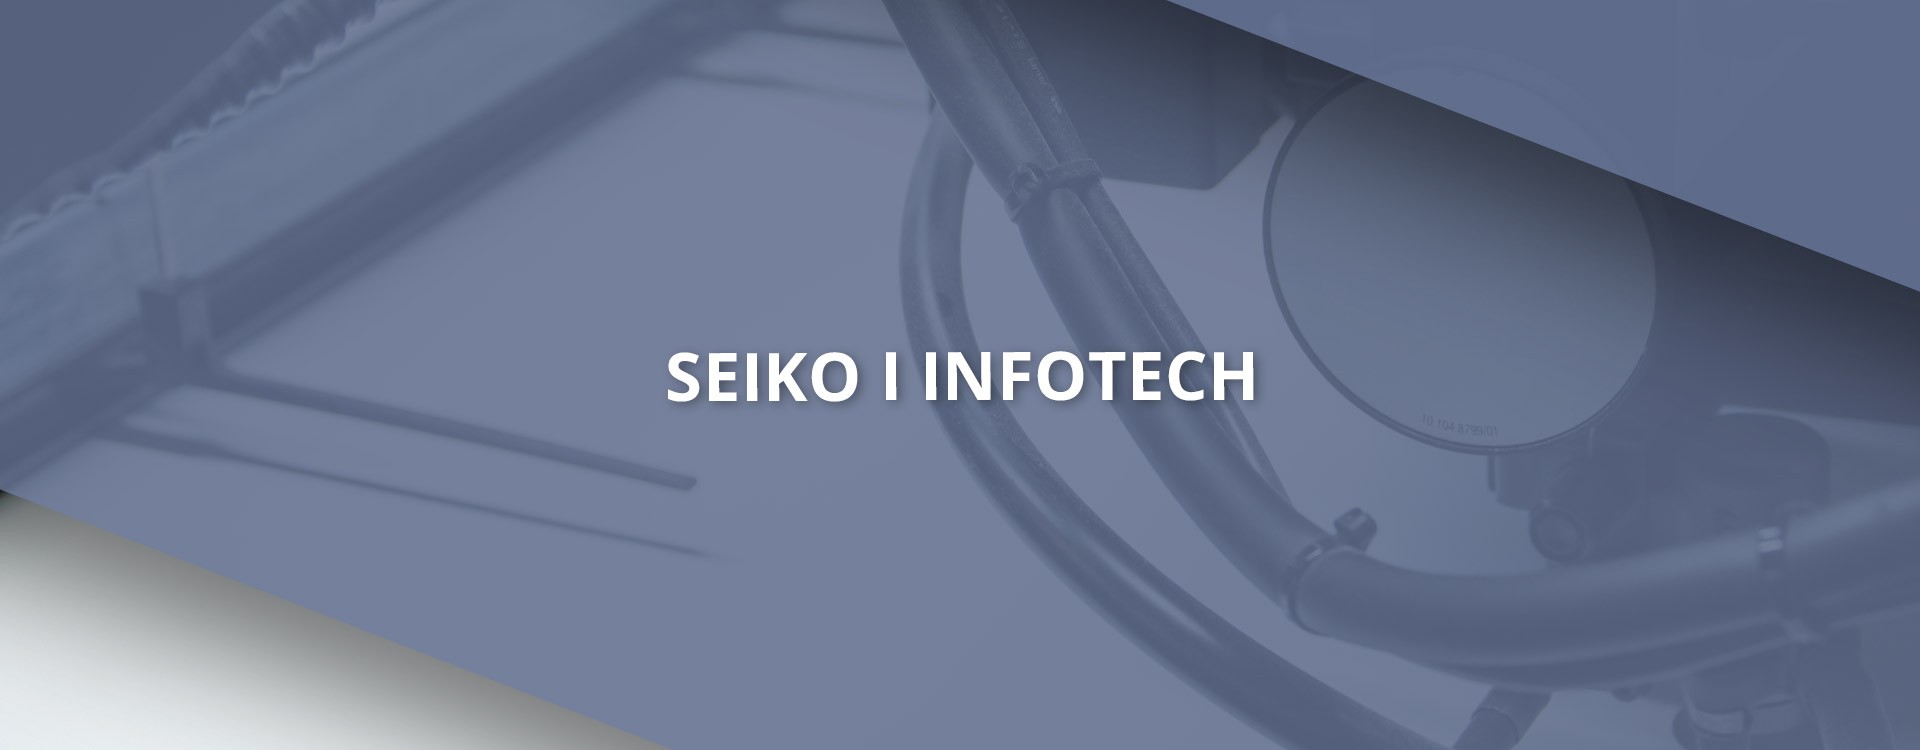 Seiko I Infotech